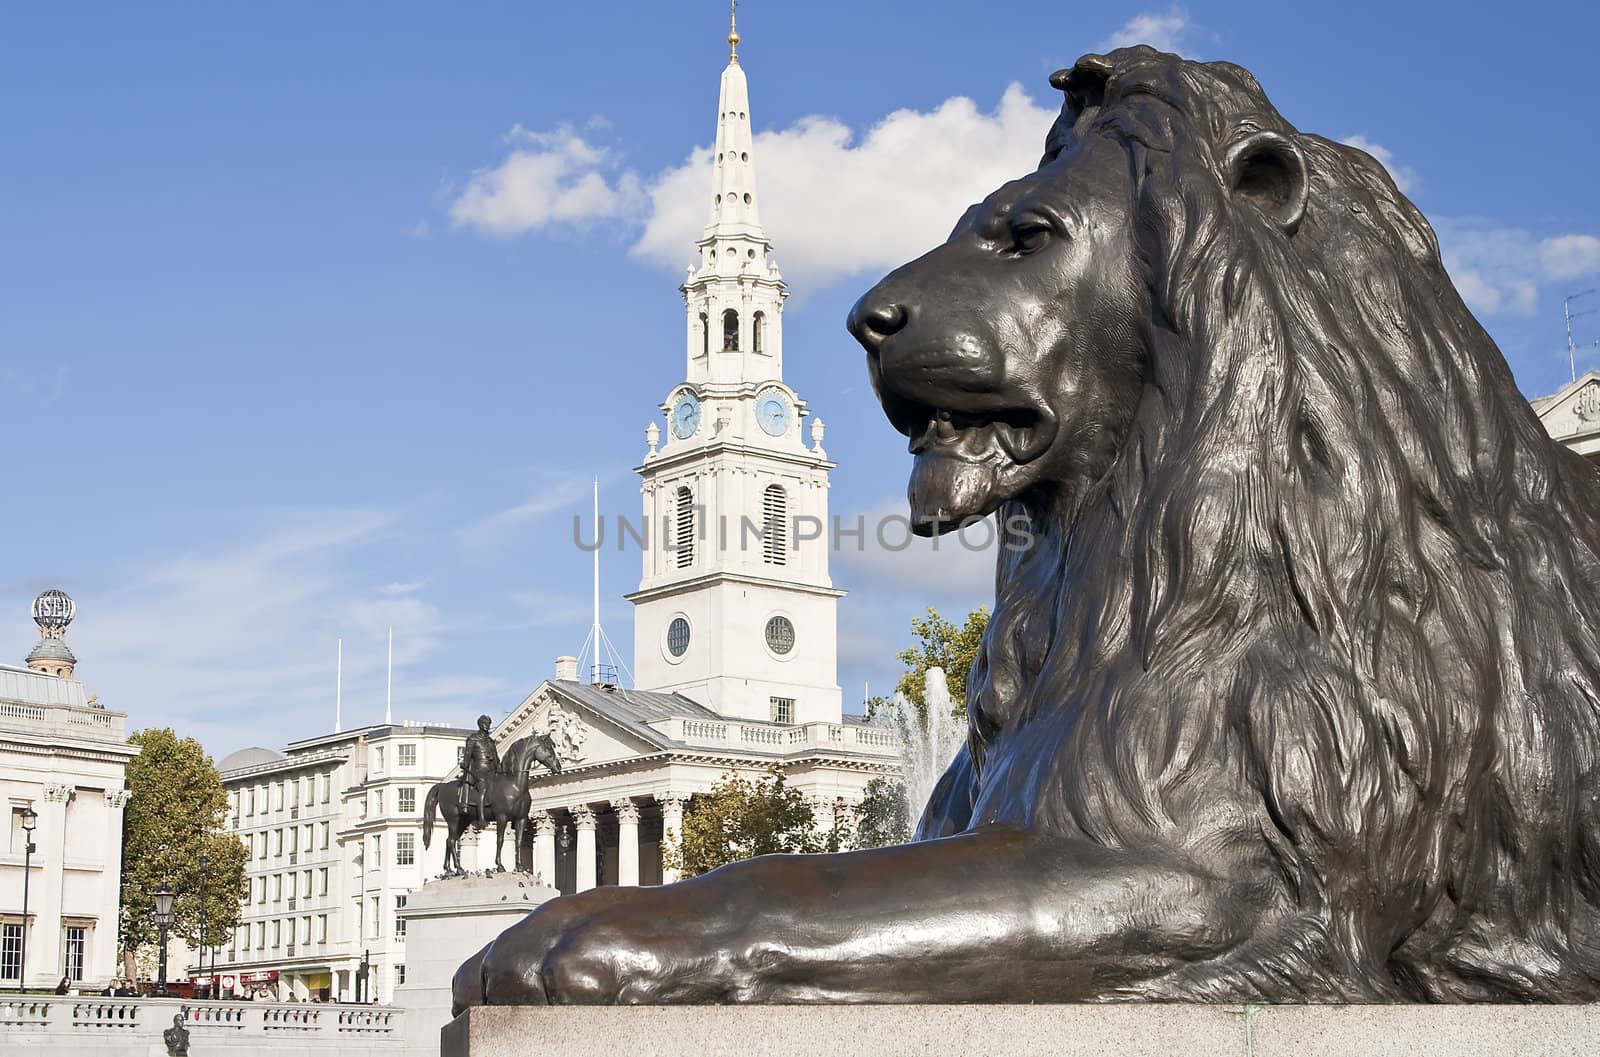 Statue of a lion in Trafalgar Square in London by kmiragaya